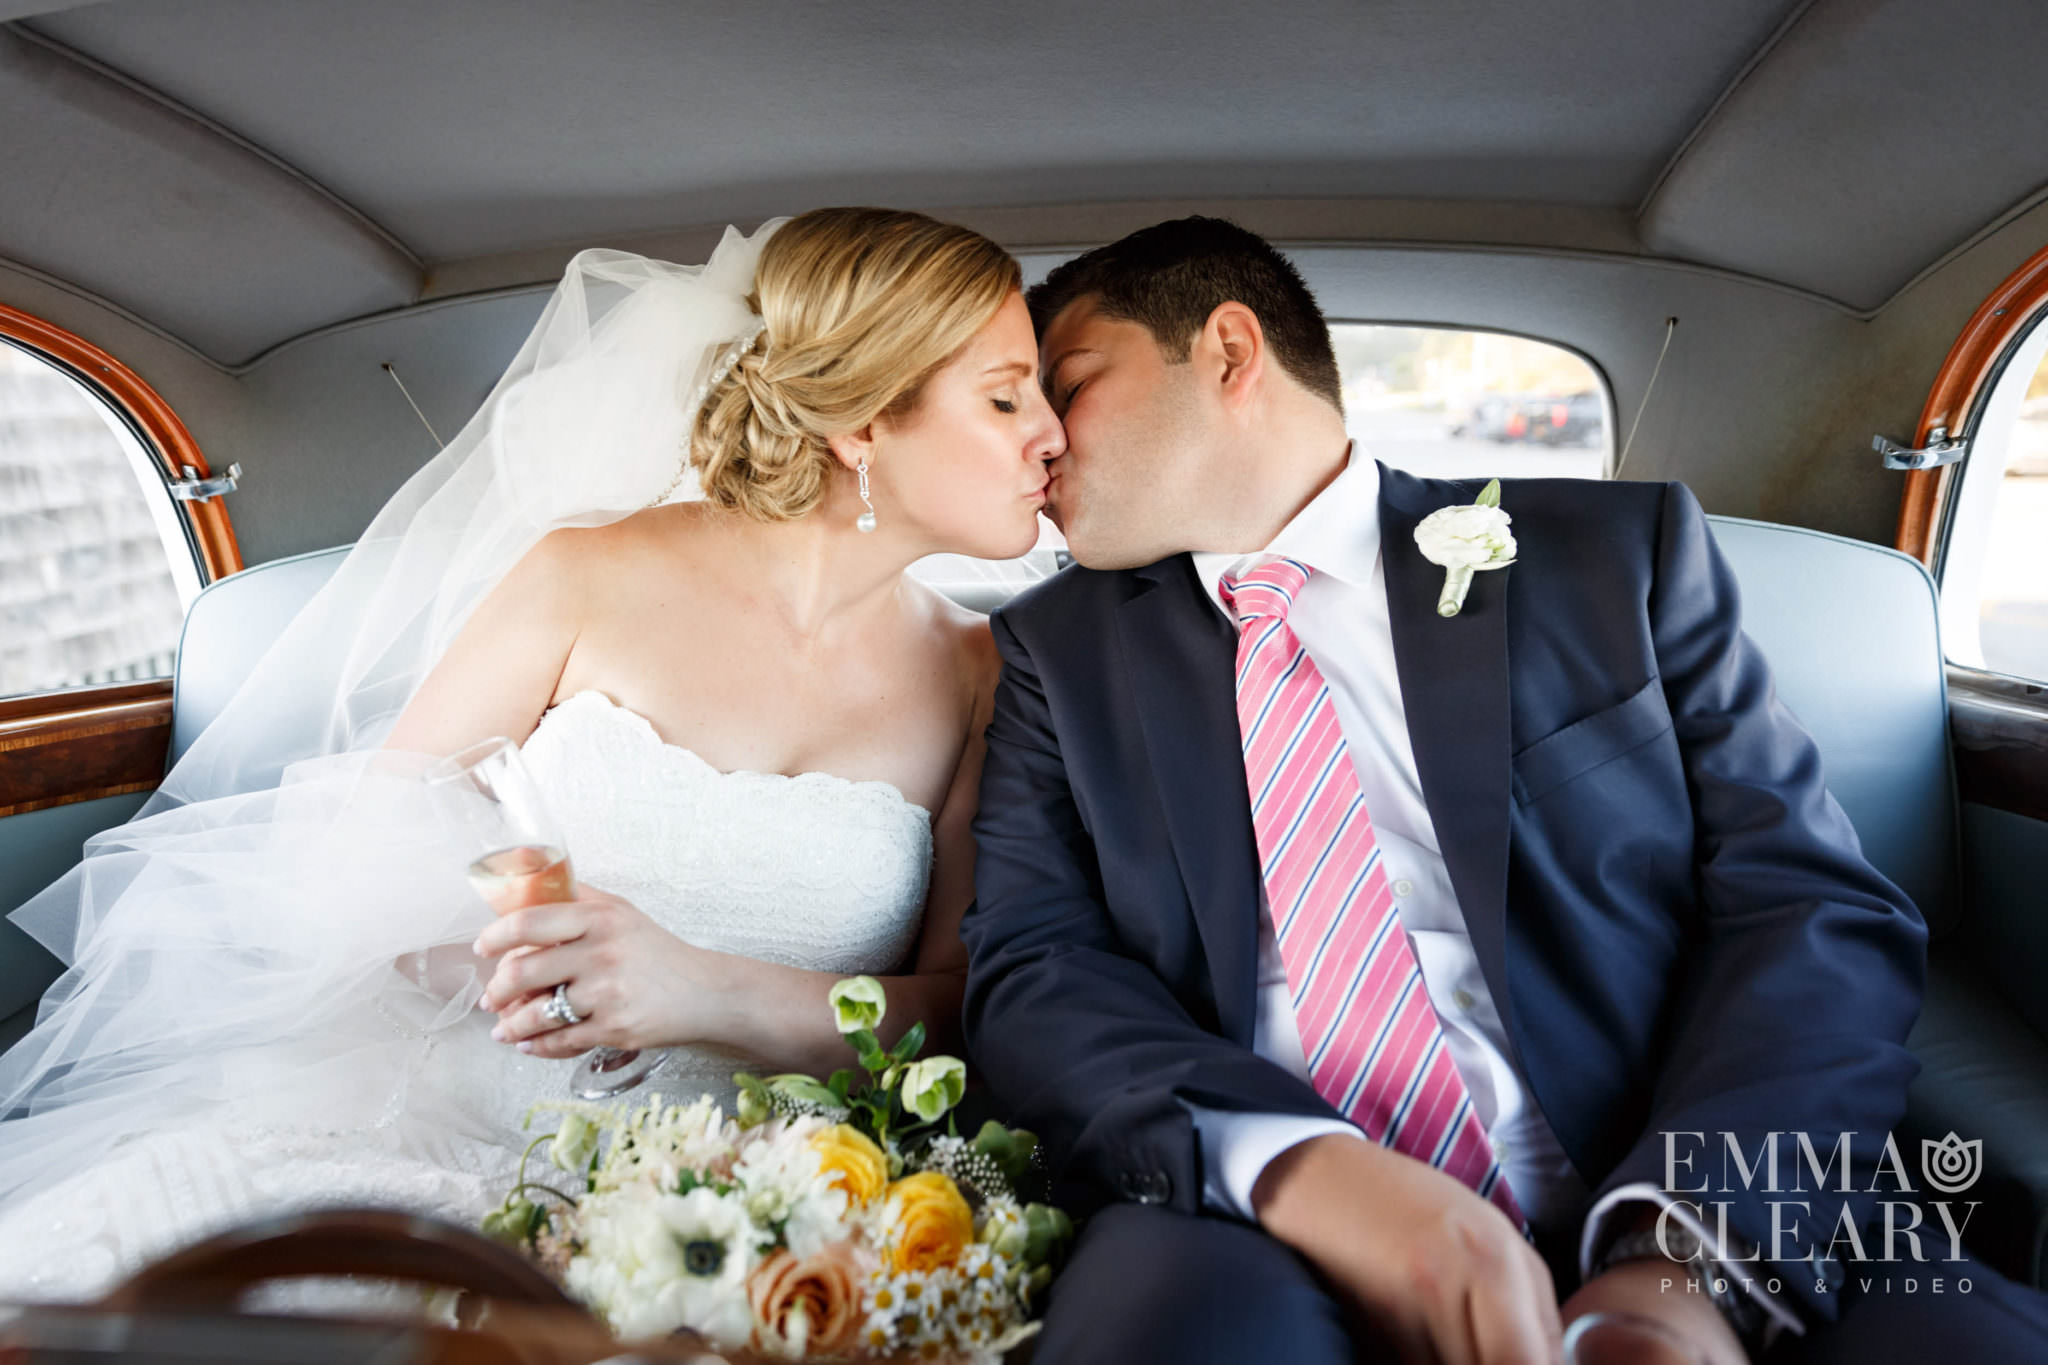 The Hedges Inn - East Hampton - Wedding Photography